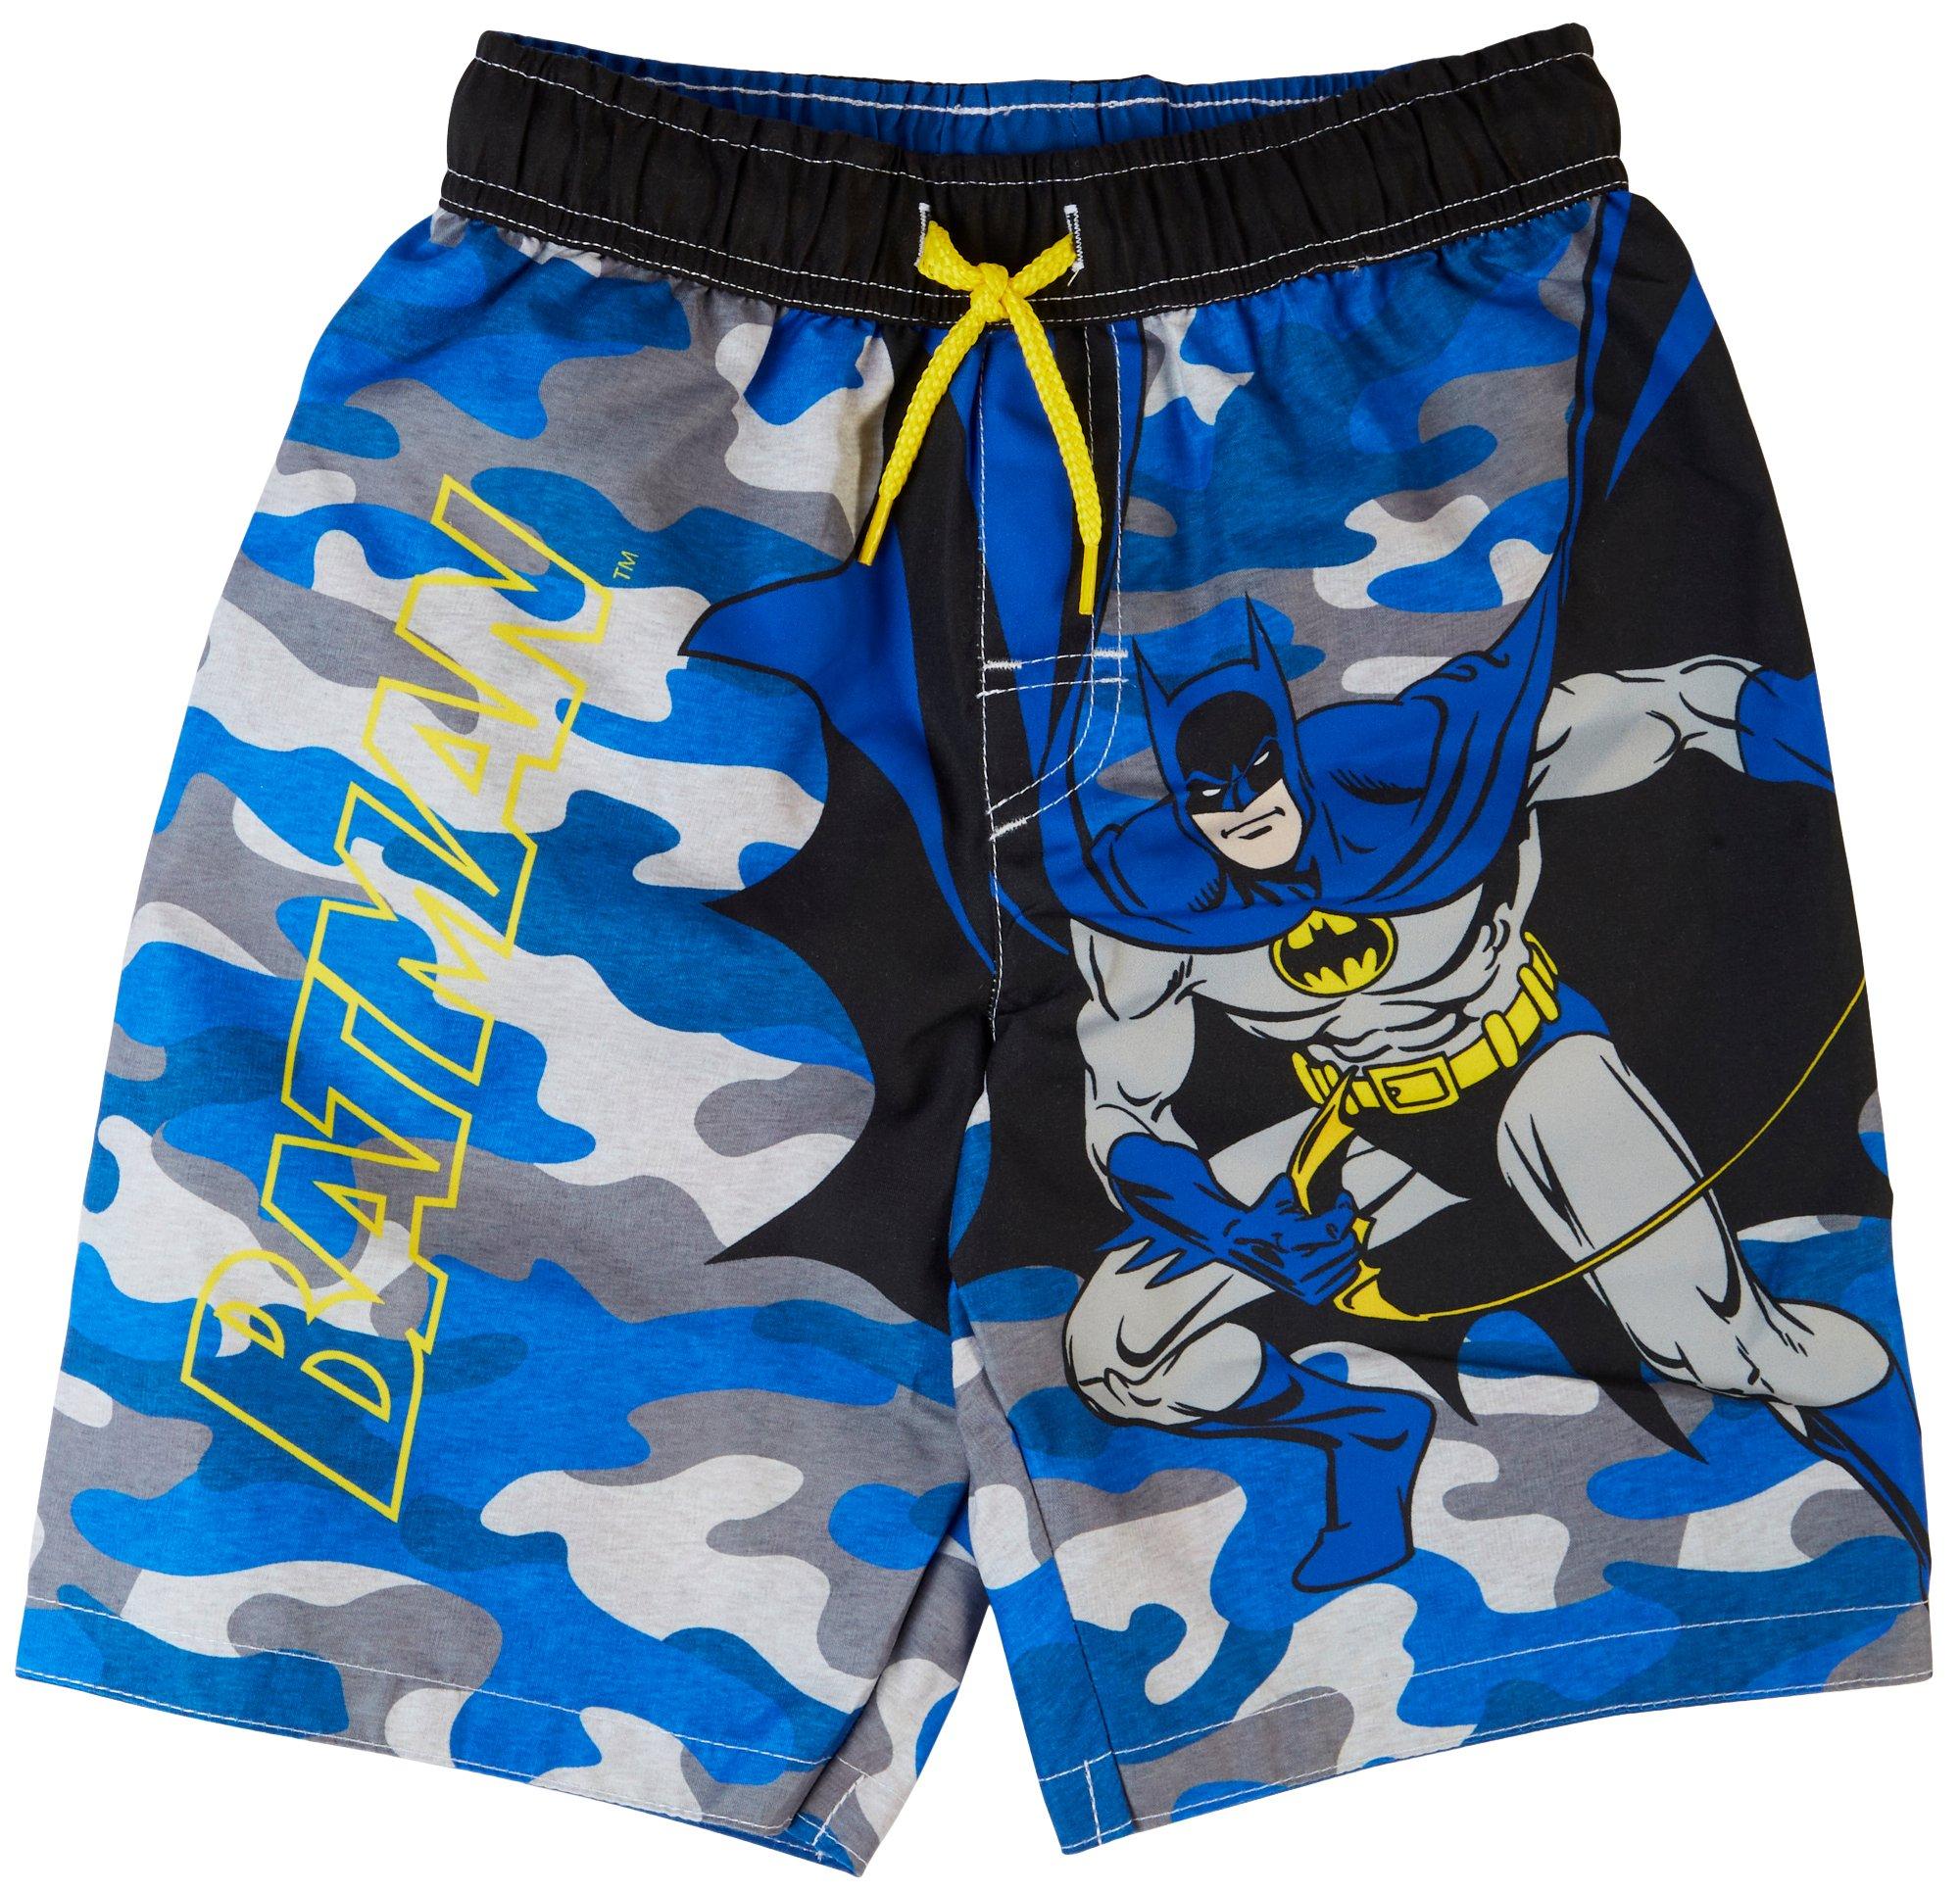 NEW Toddler Boys Licensed Batman Logo Print Board Swim Trunks Shorts Size 5T 